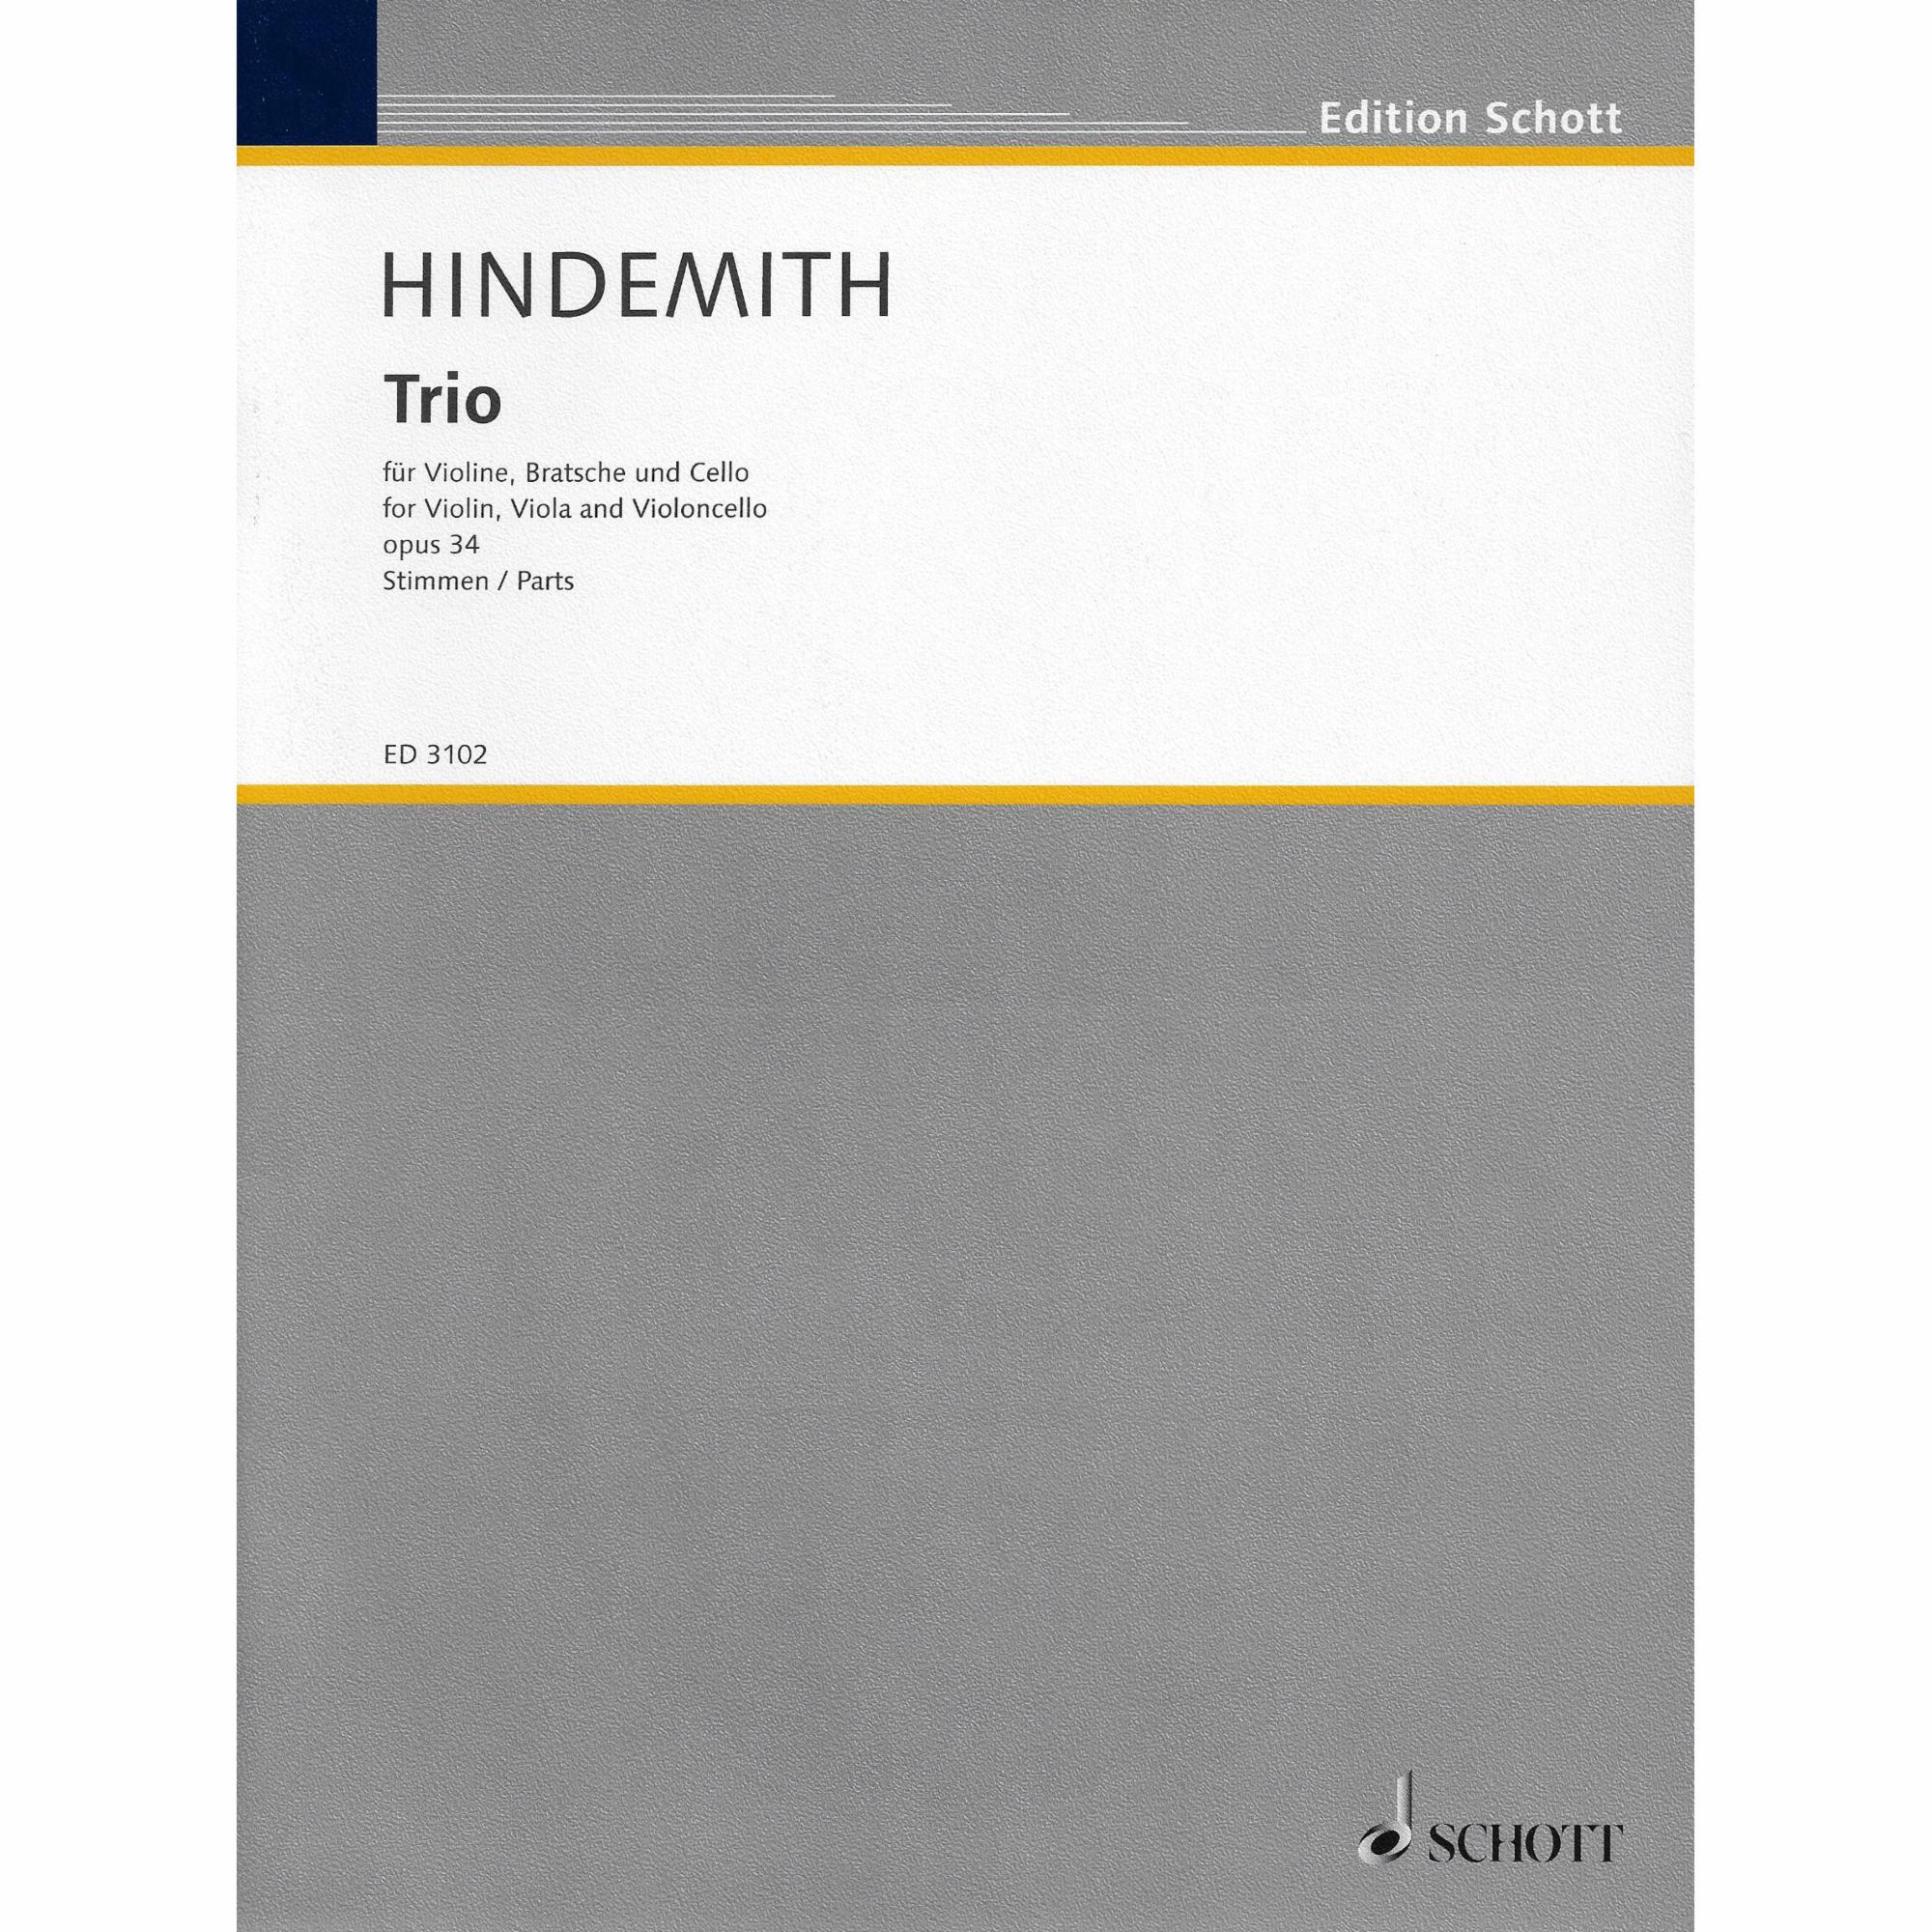 Hindemith -- Trio, Op. 34 for Violin, Viola, and Cello